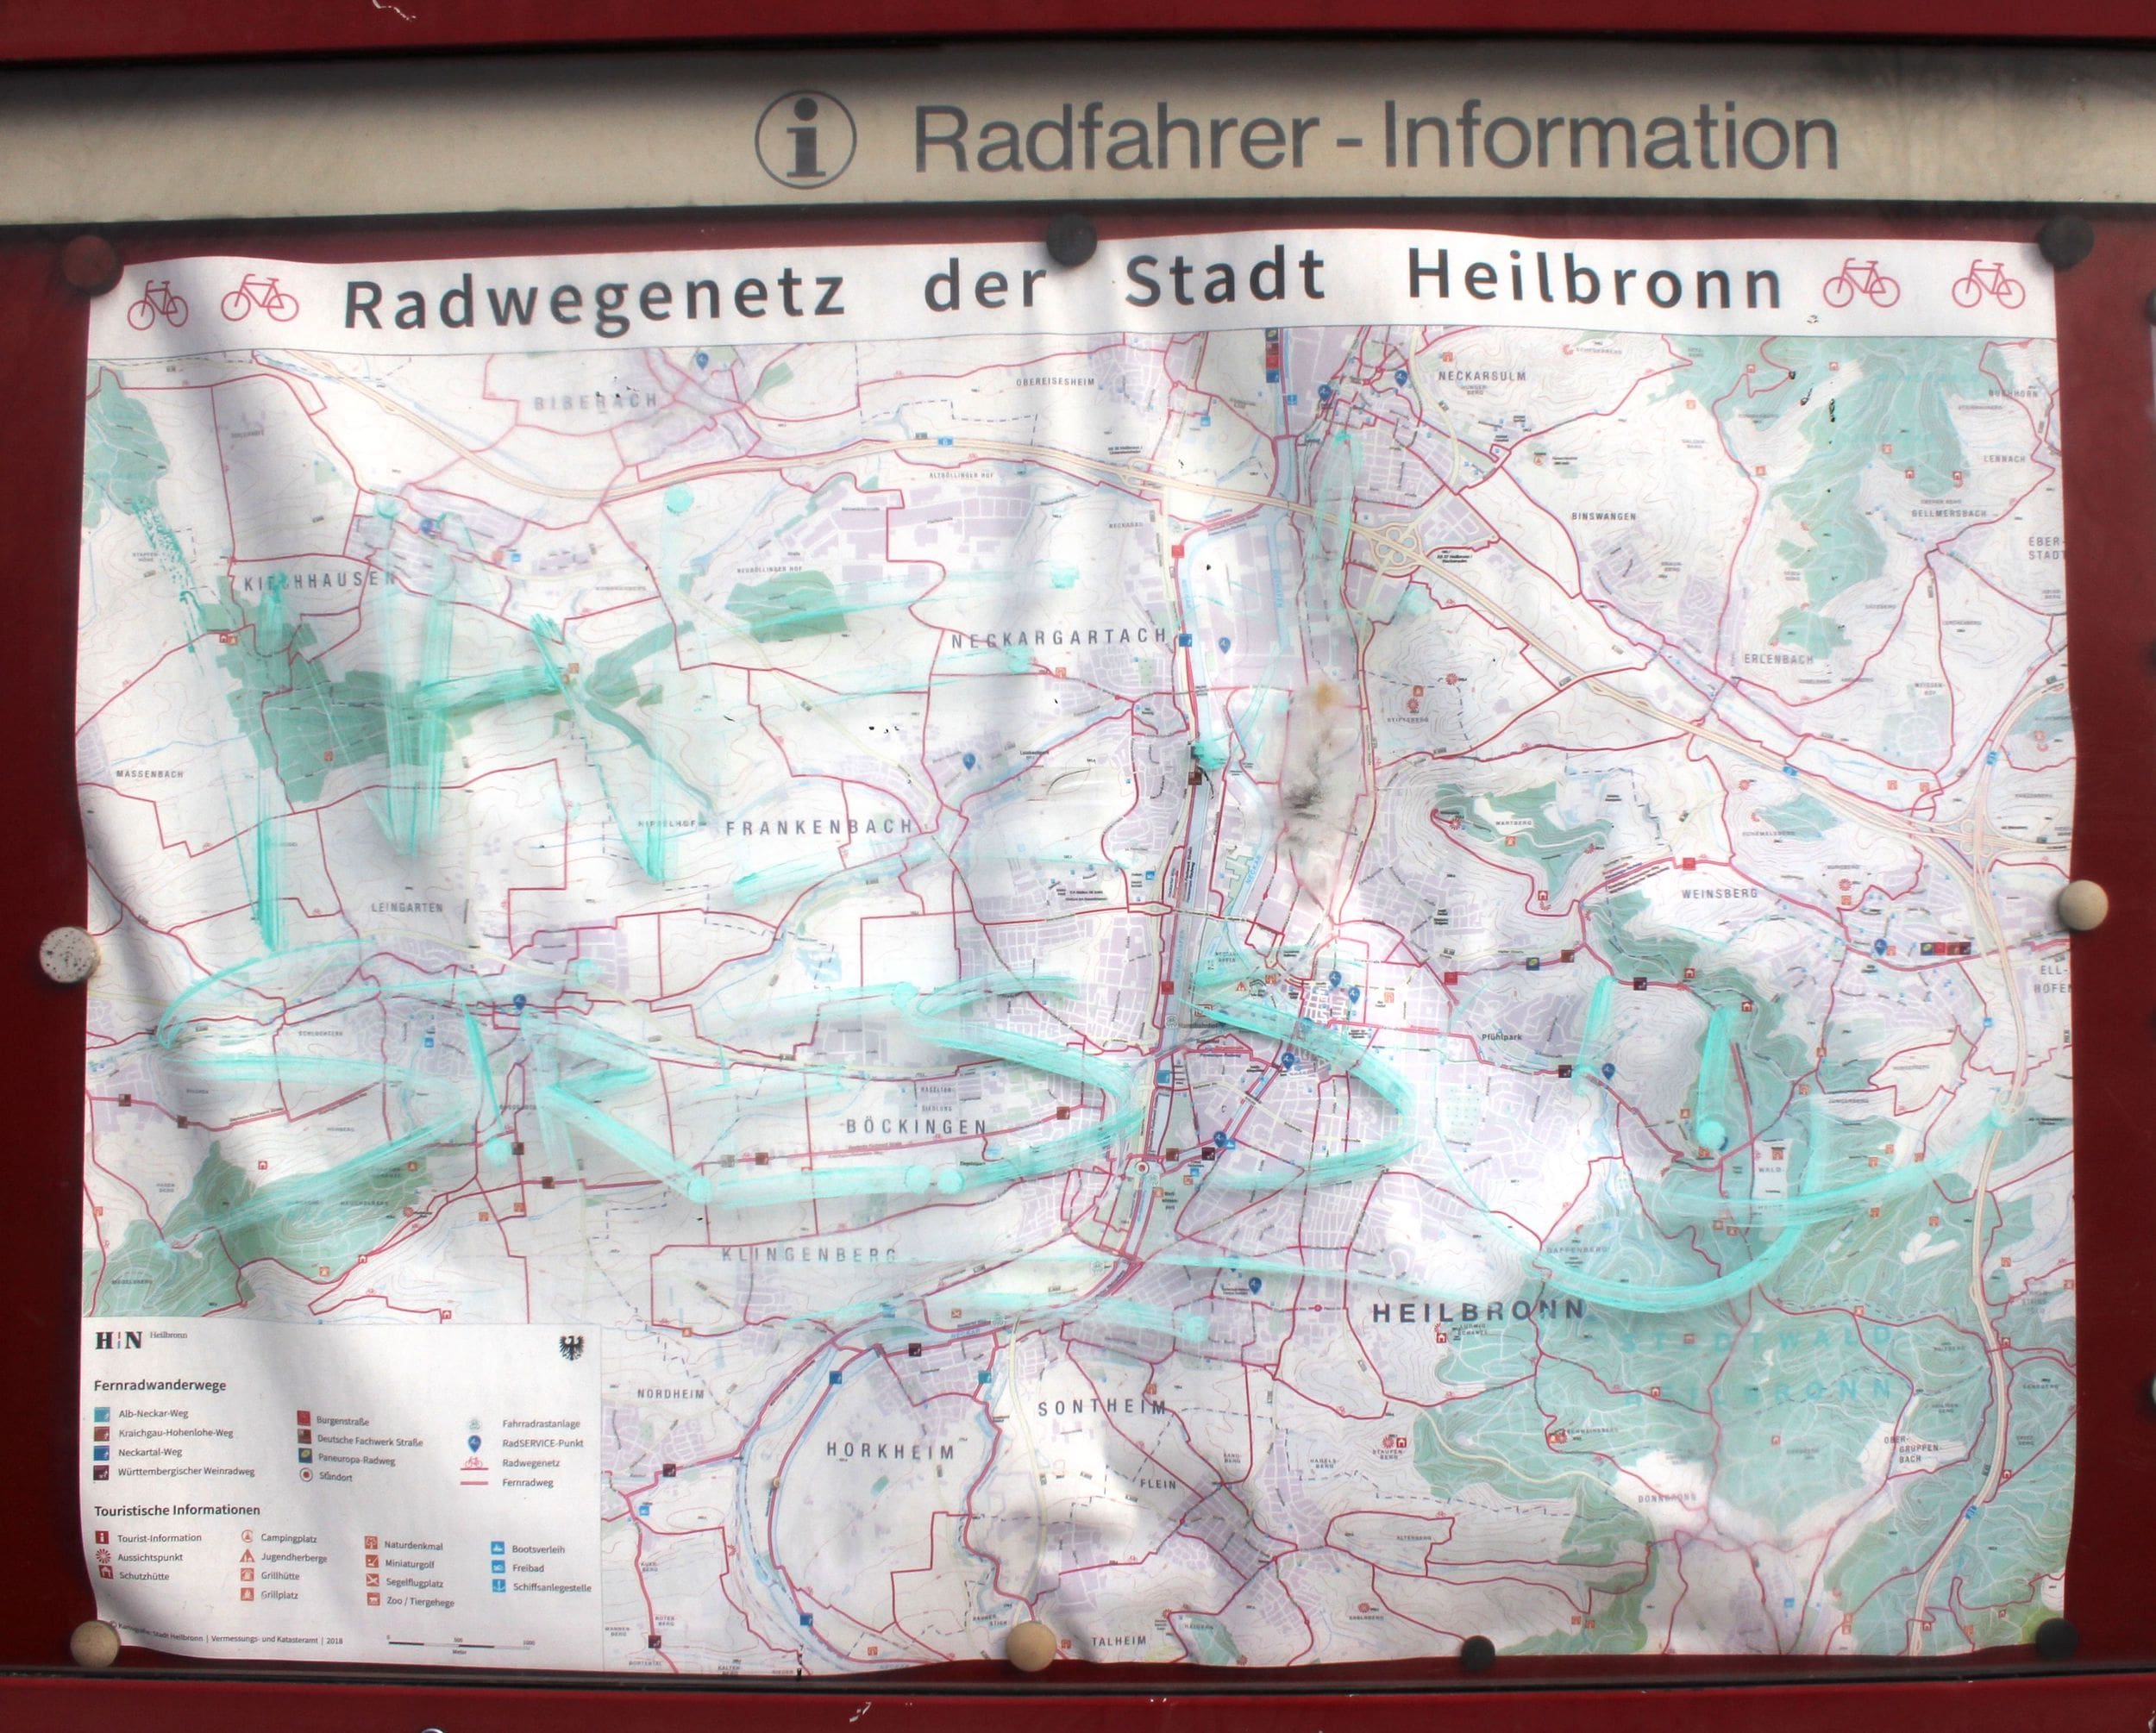 Radwegenetz der Stadt Heilbronn